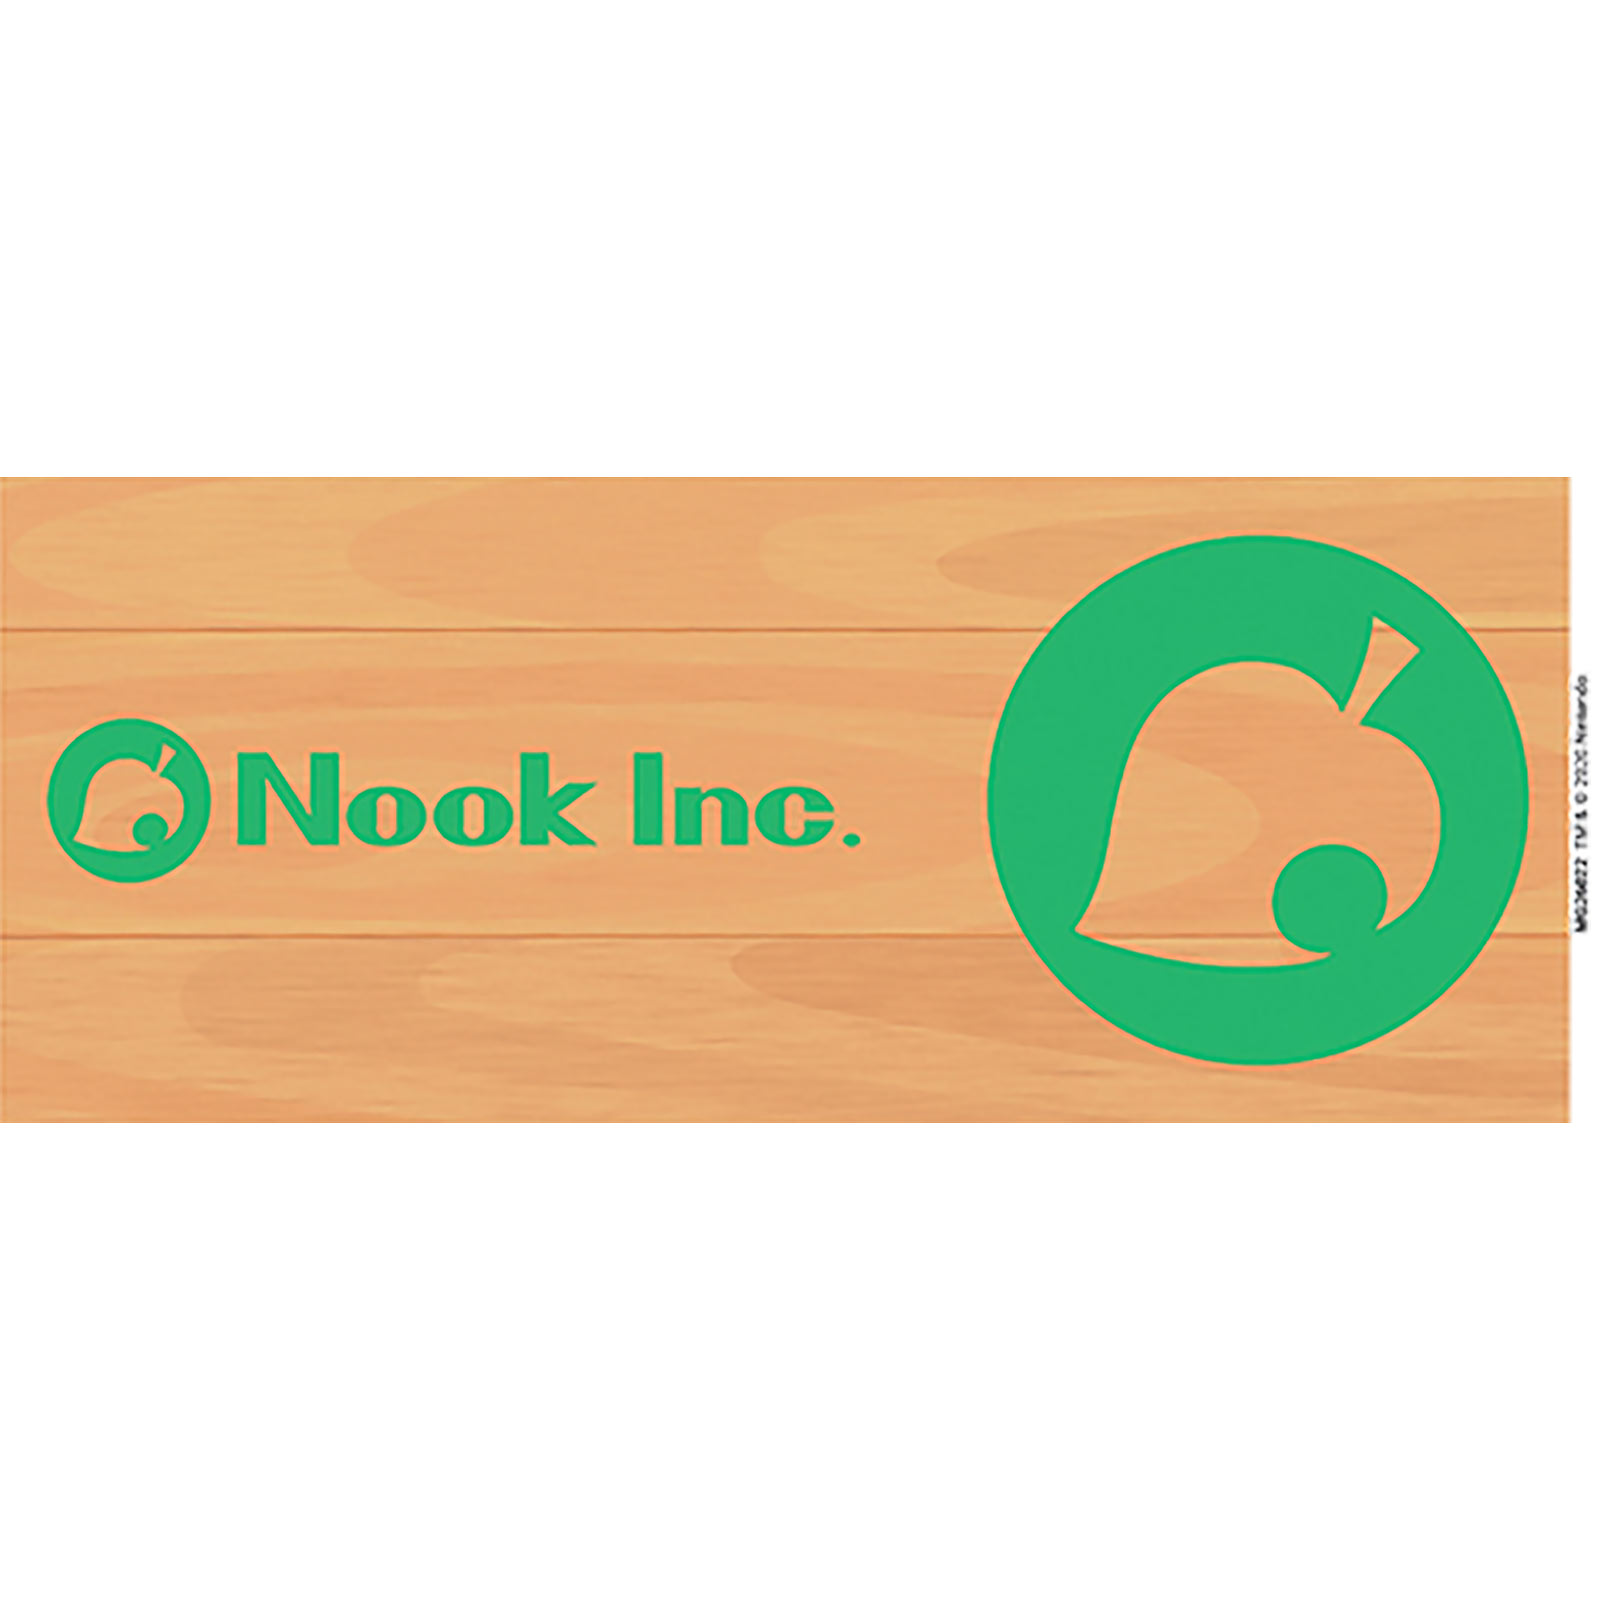 Animal Crossing - Nook Inc. Mok